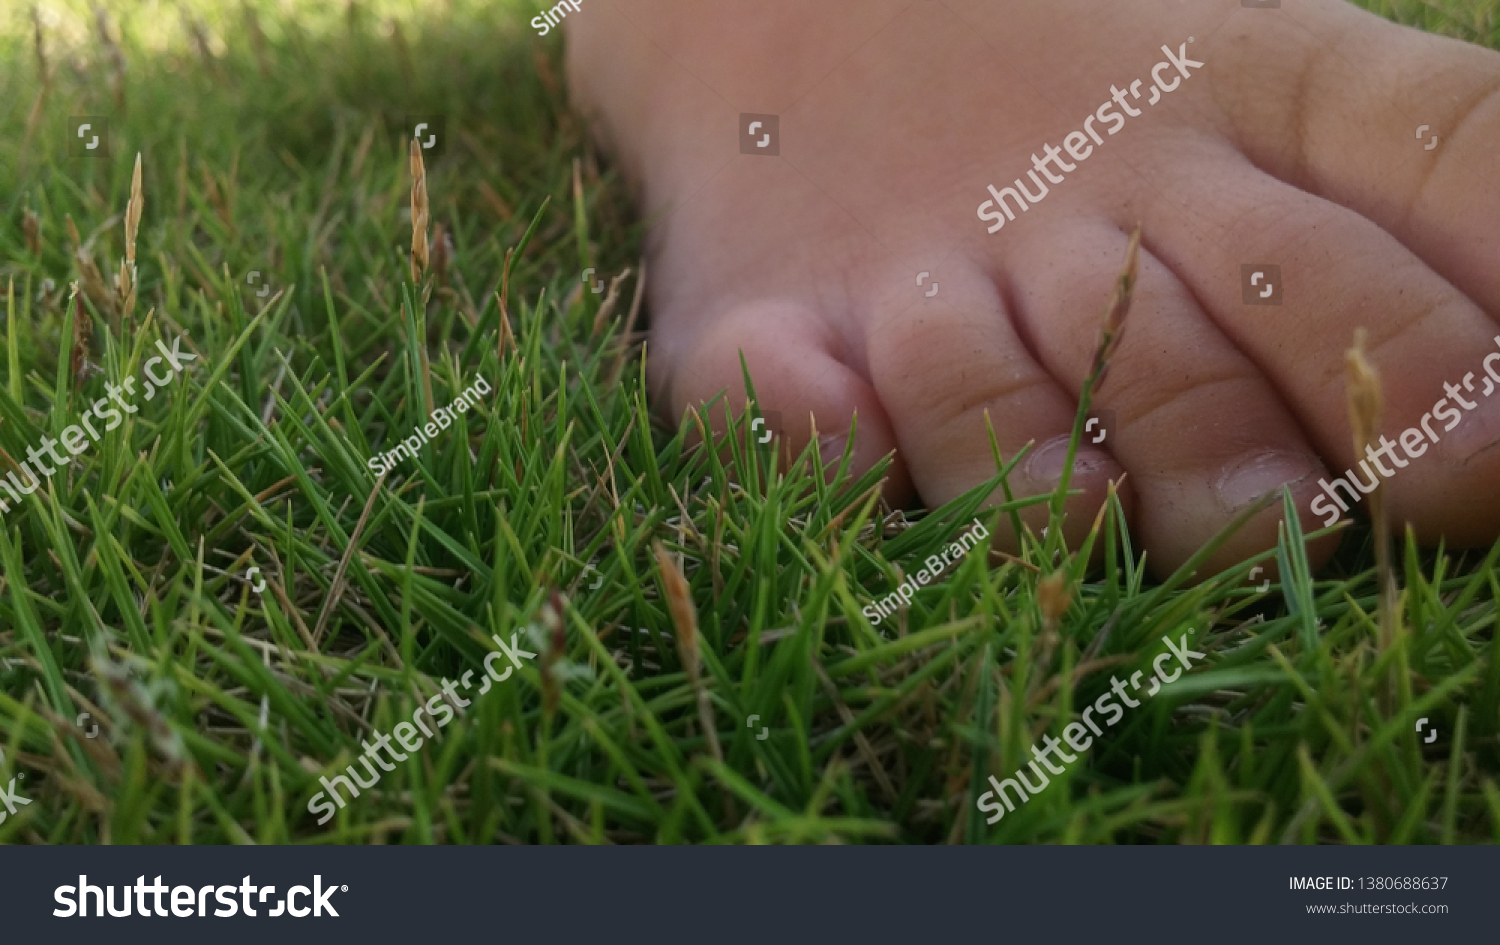 Tired feet resting on soft comfy grass.  Grass not trim or cut but naturally grow. #1380688637